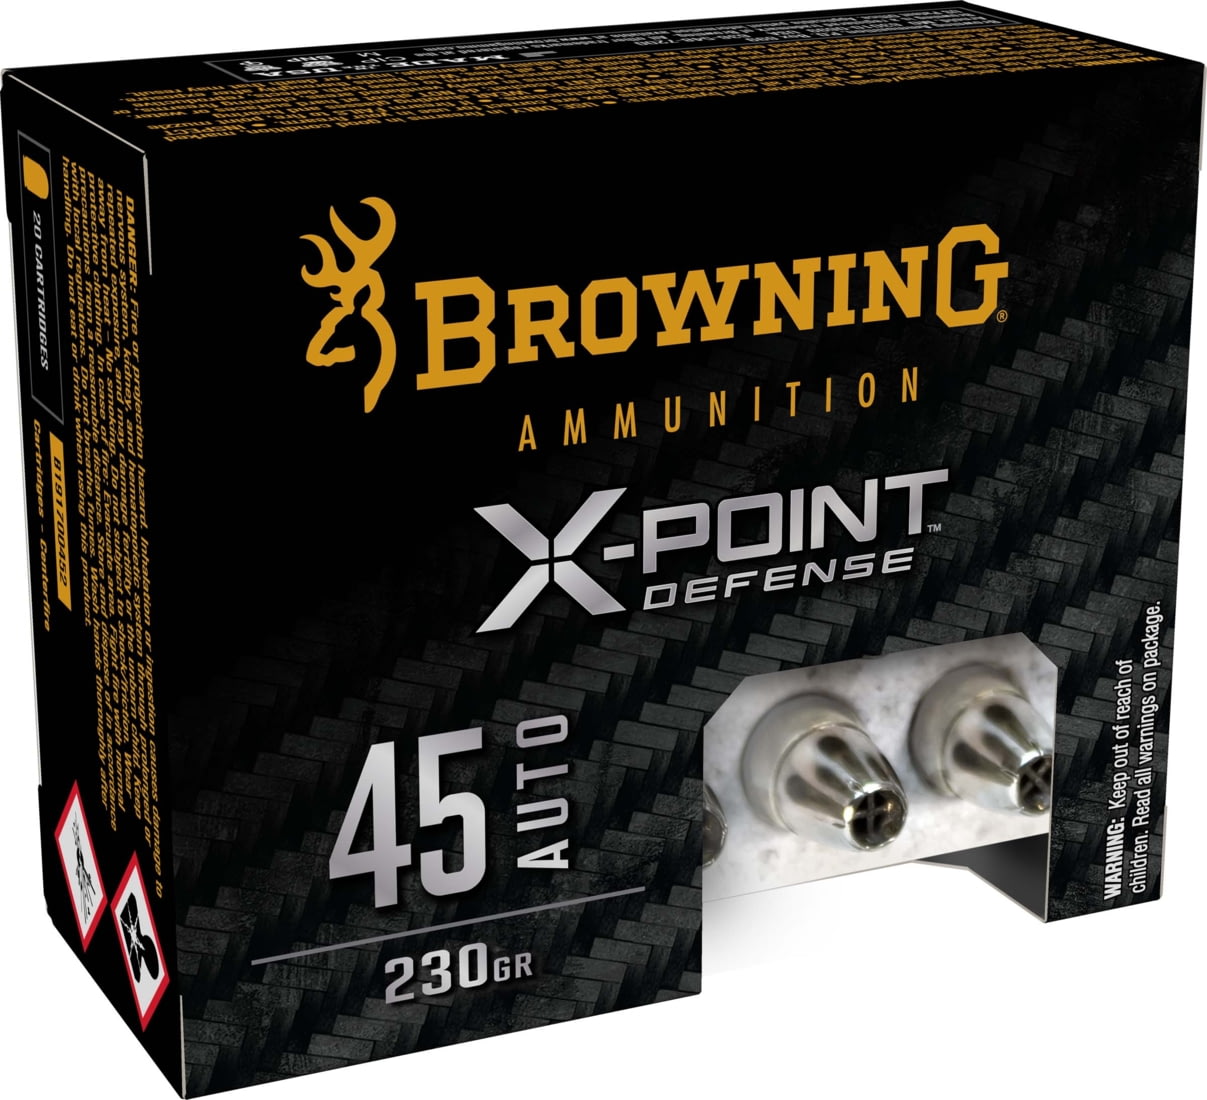 Browning X-Point .45 ACP 230 grain X-Point Brass Cased Centerfire Pistol Ammunition